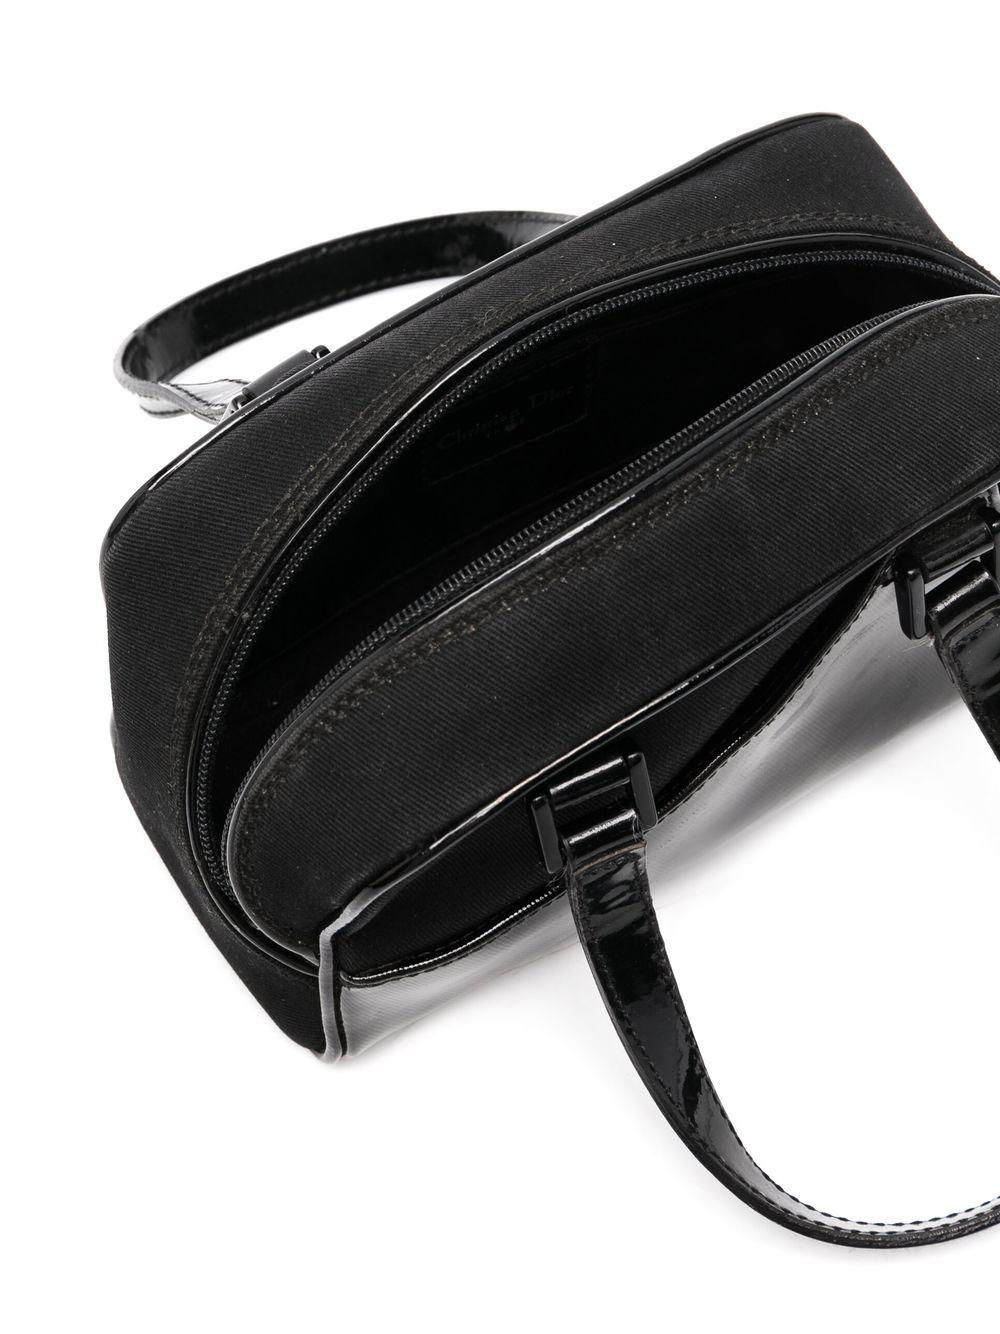 Christian Dior Black Patent Mini Handbag For Sale 1